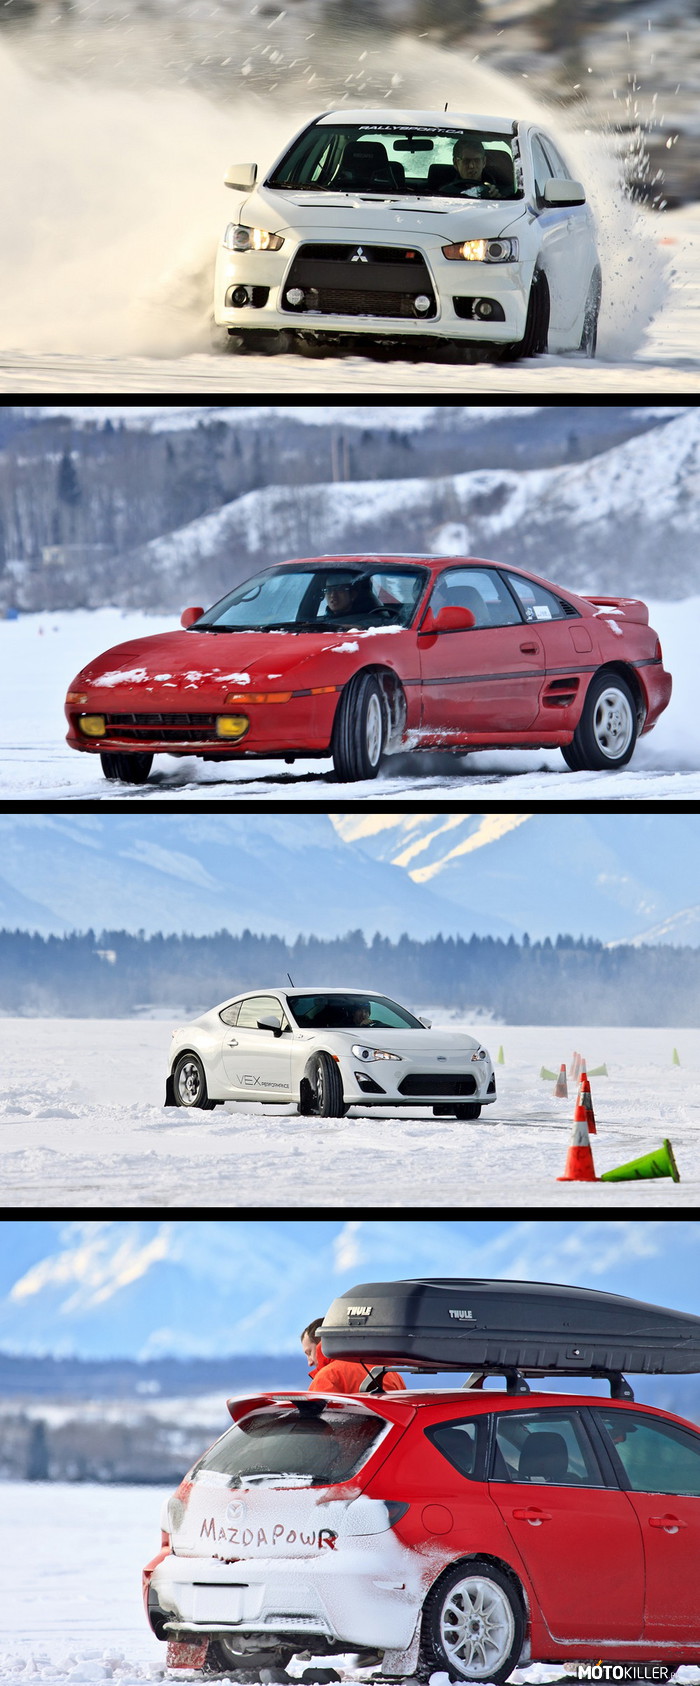 Zabawa i nauka – Kanadyjski SASC Winter-Ice Driver Training Program. 